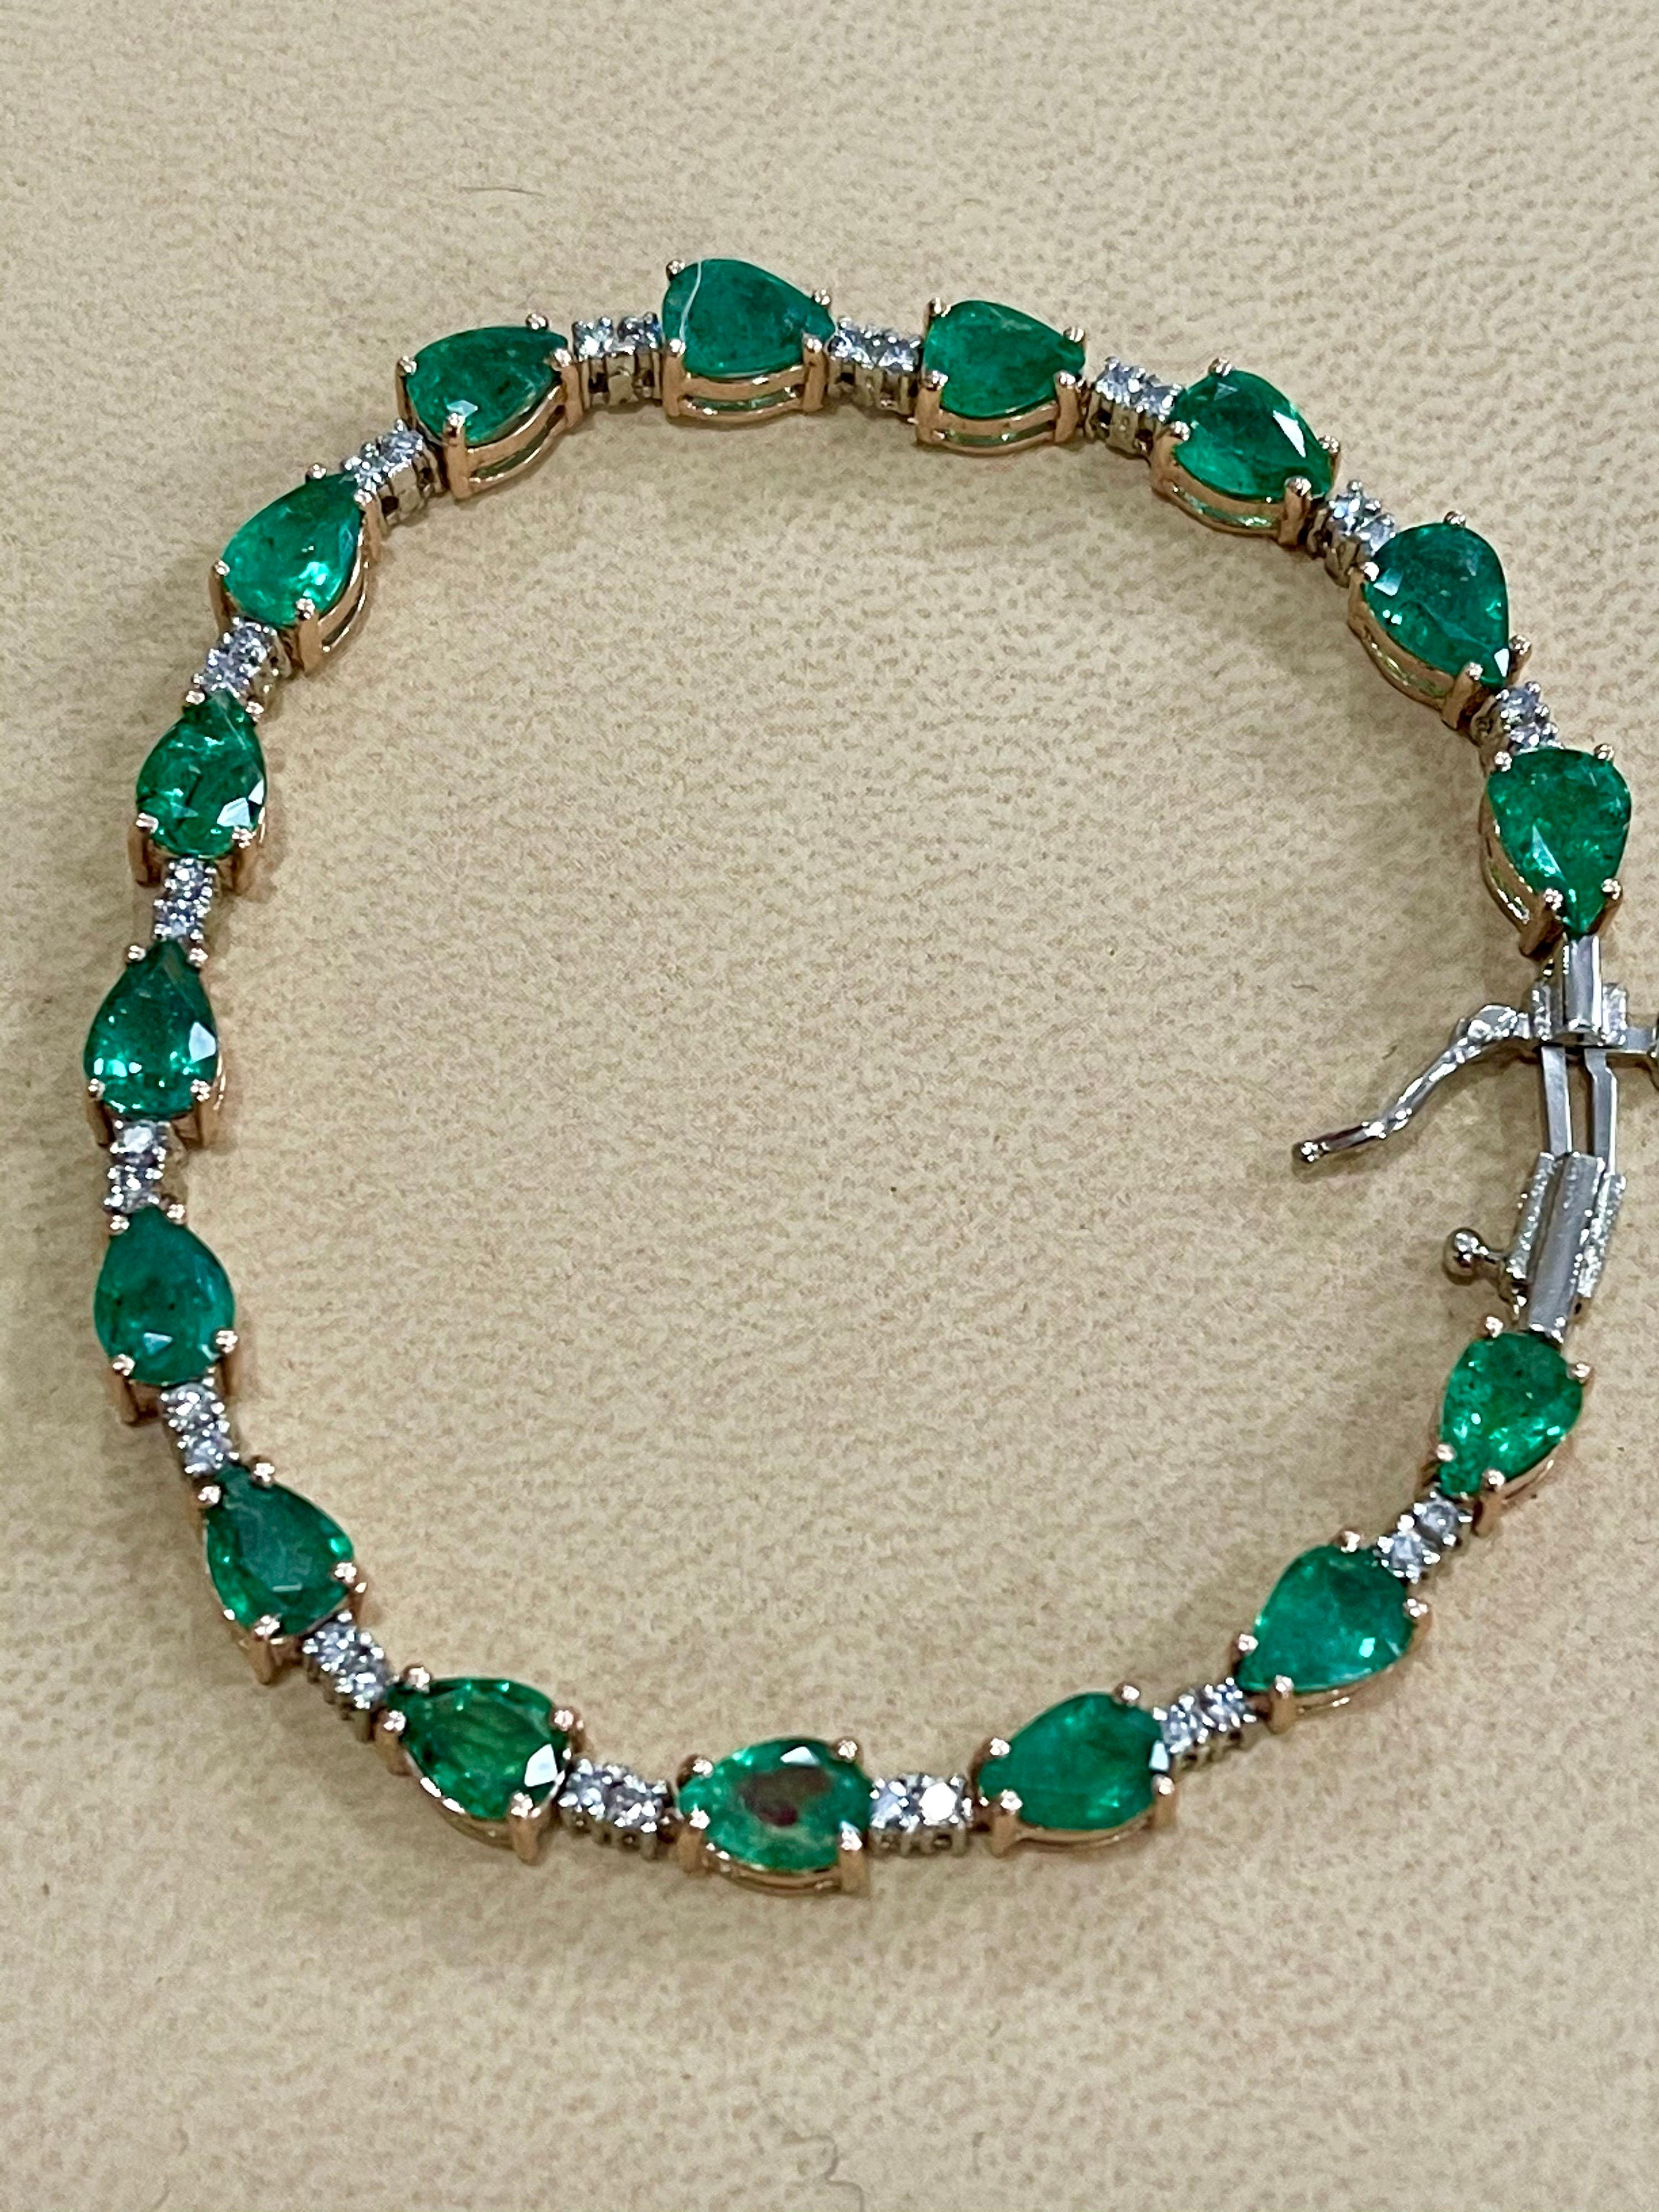 13 Carat Natural Zambian Emerald and Diamond Tennis Bracelet 14 Karat White Gold 1